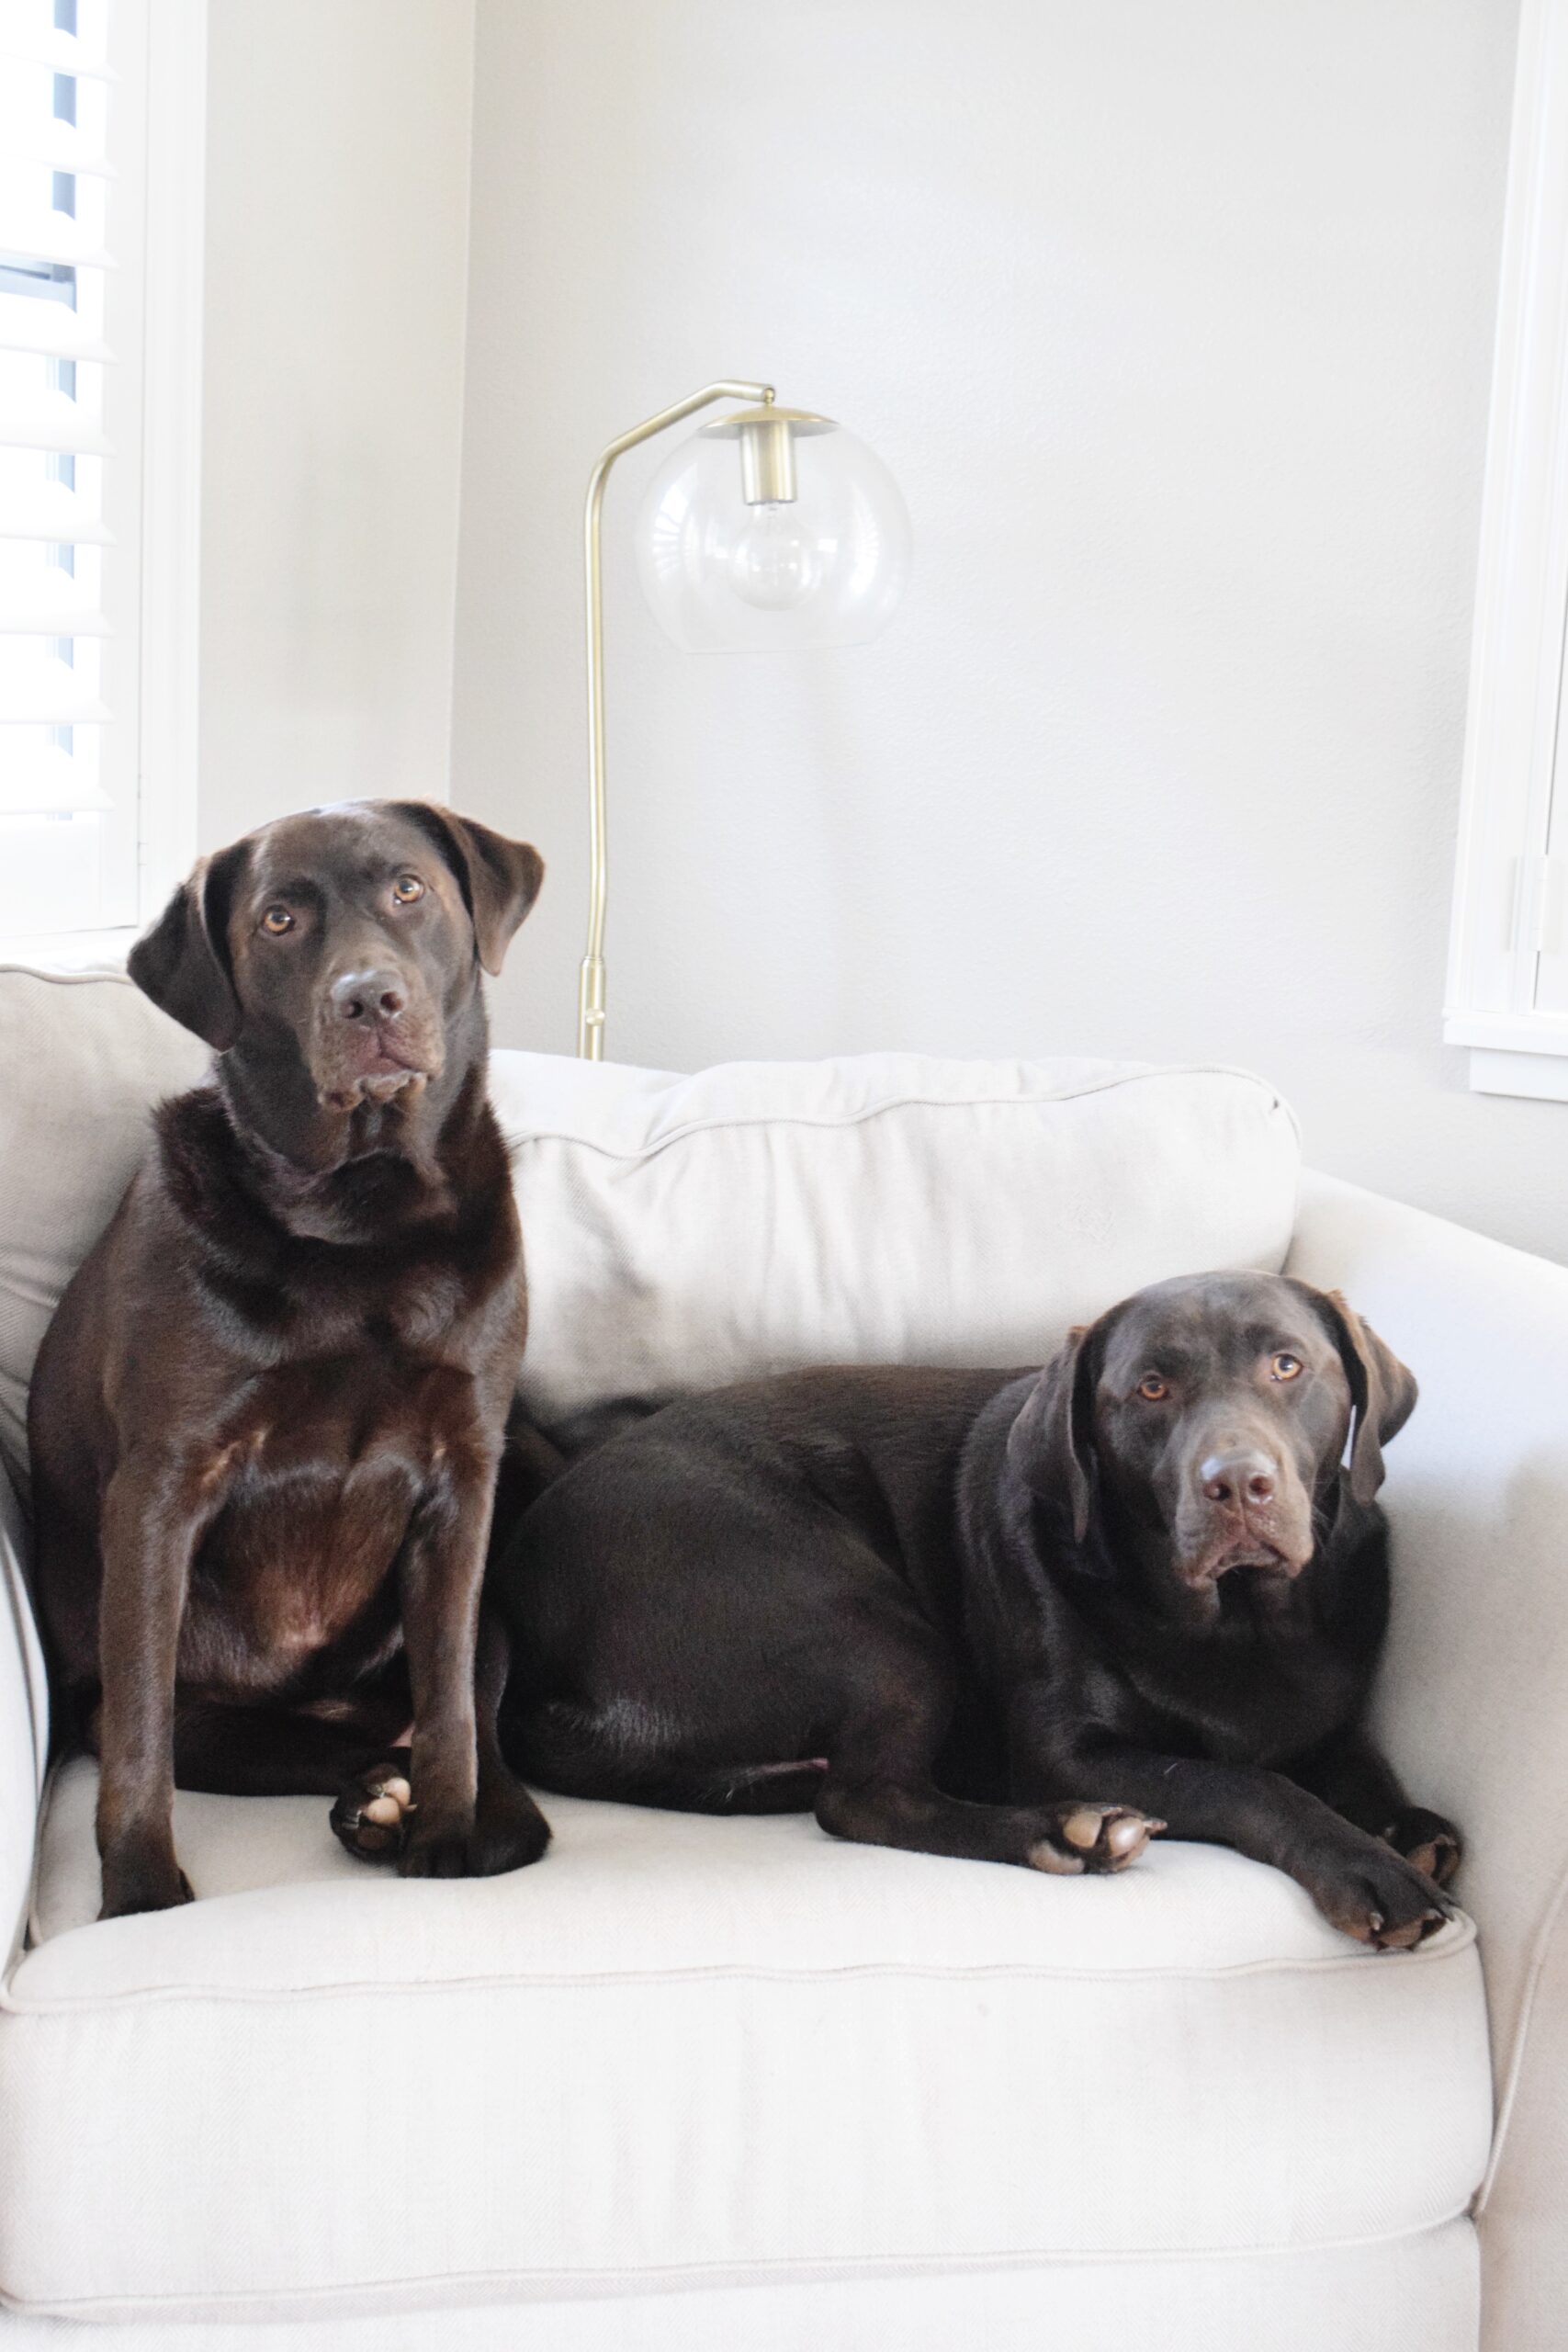 Two chocolate Labradors 